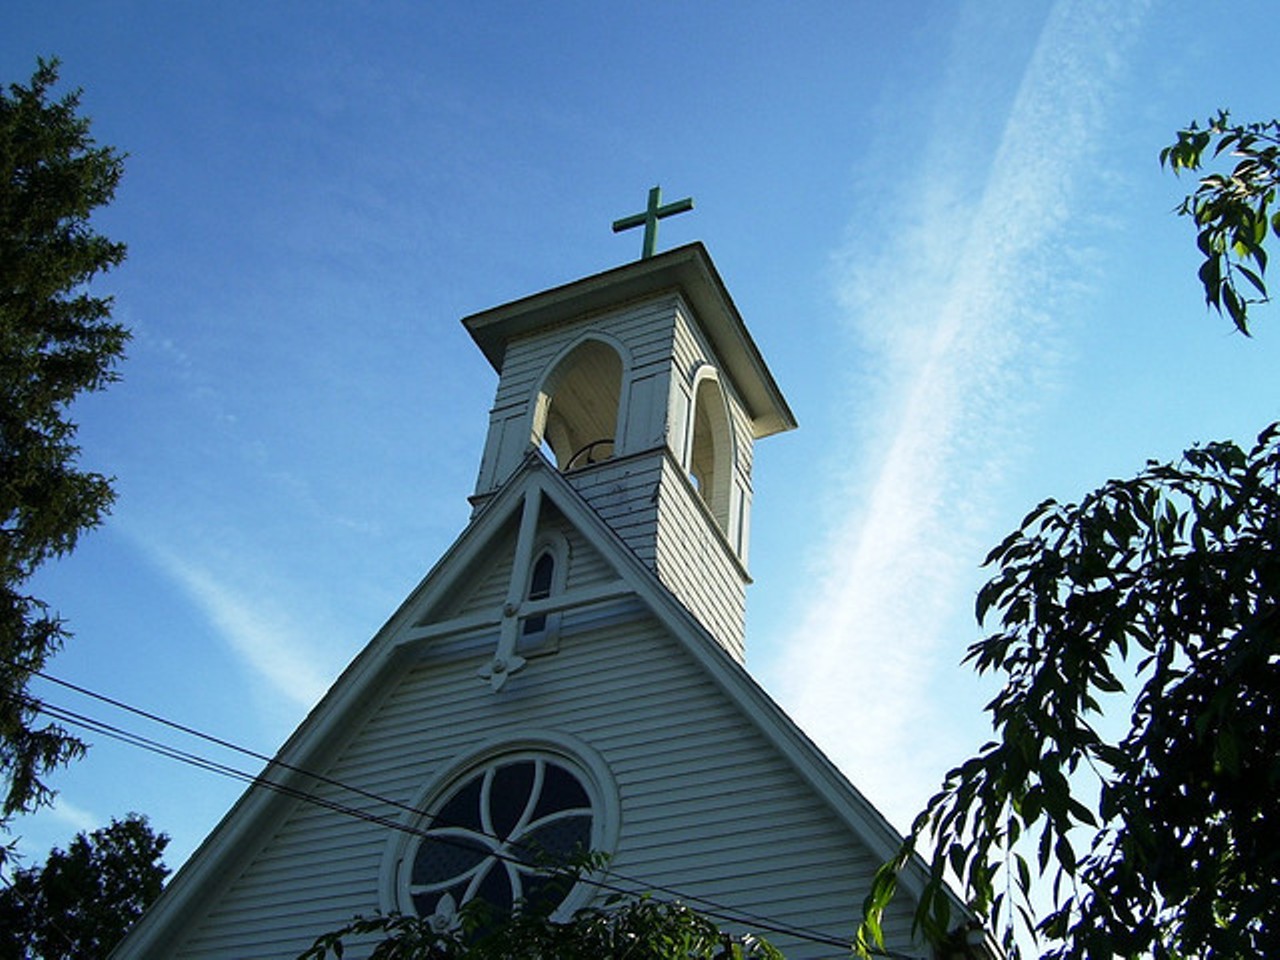 The so-called "satanic church"